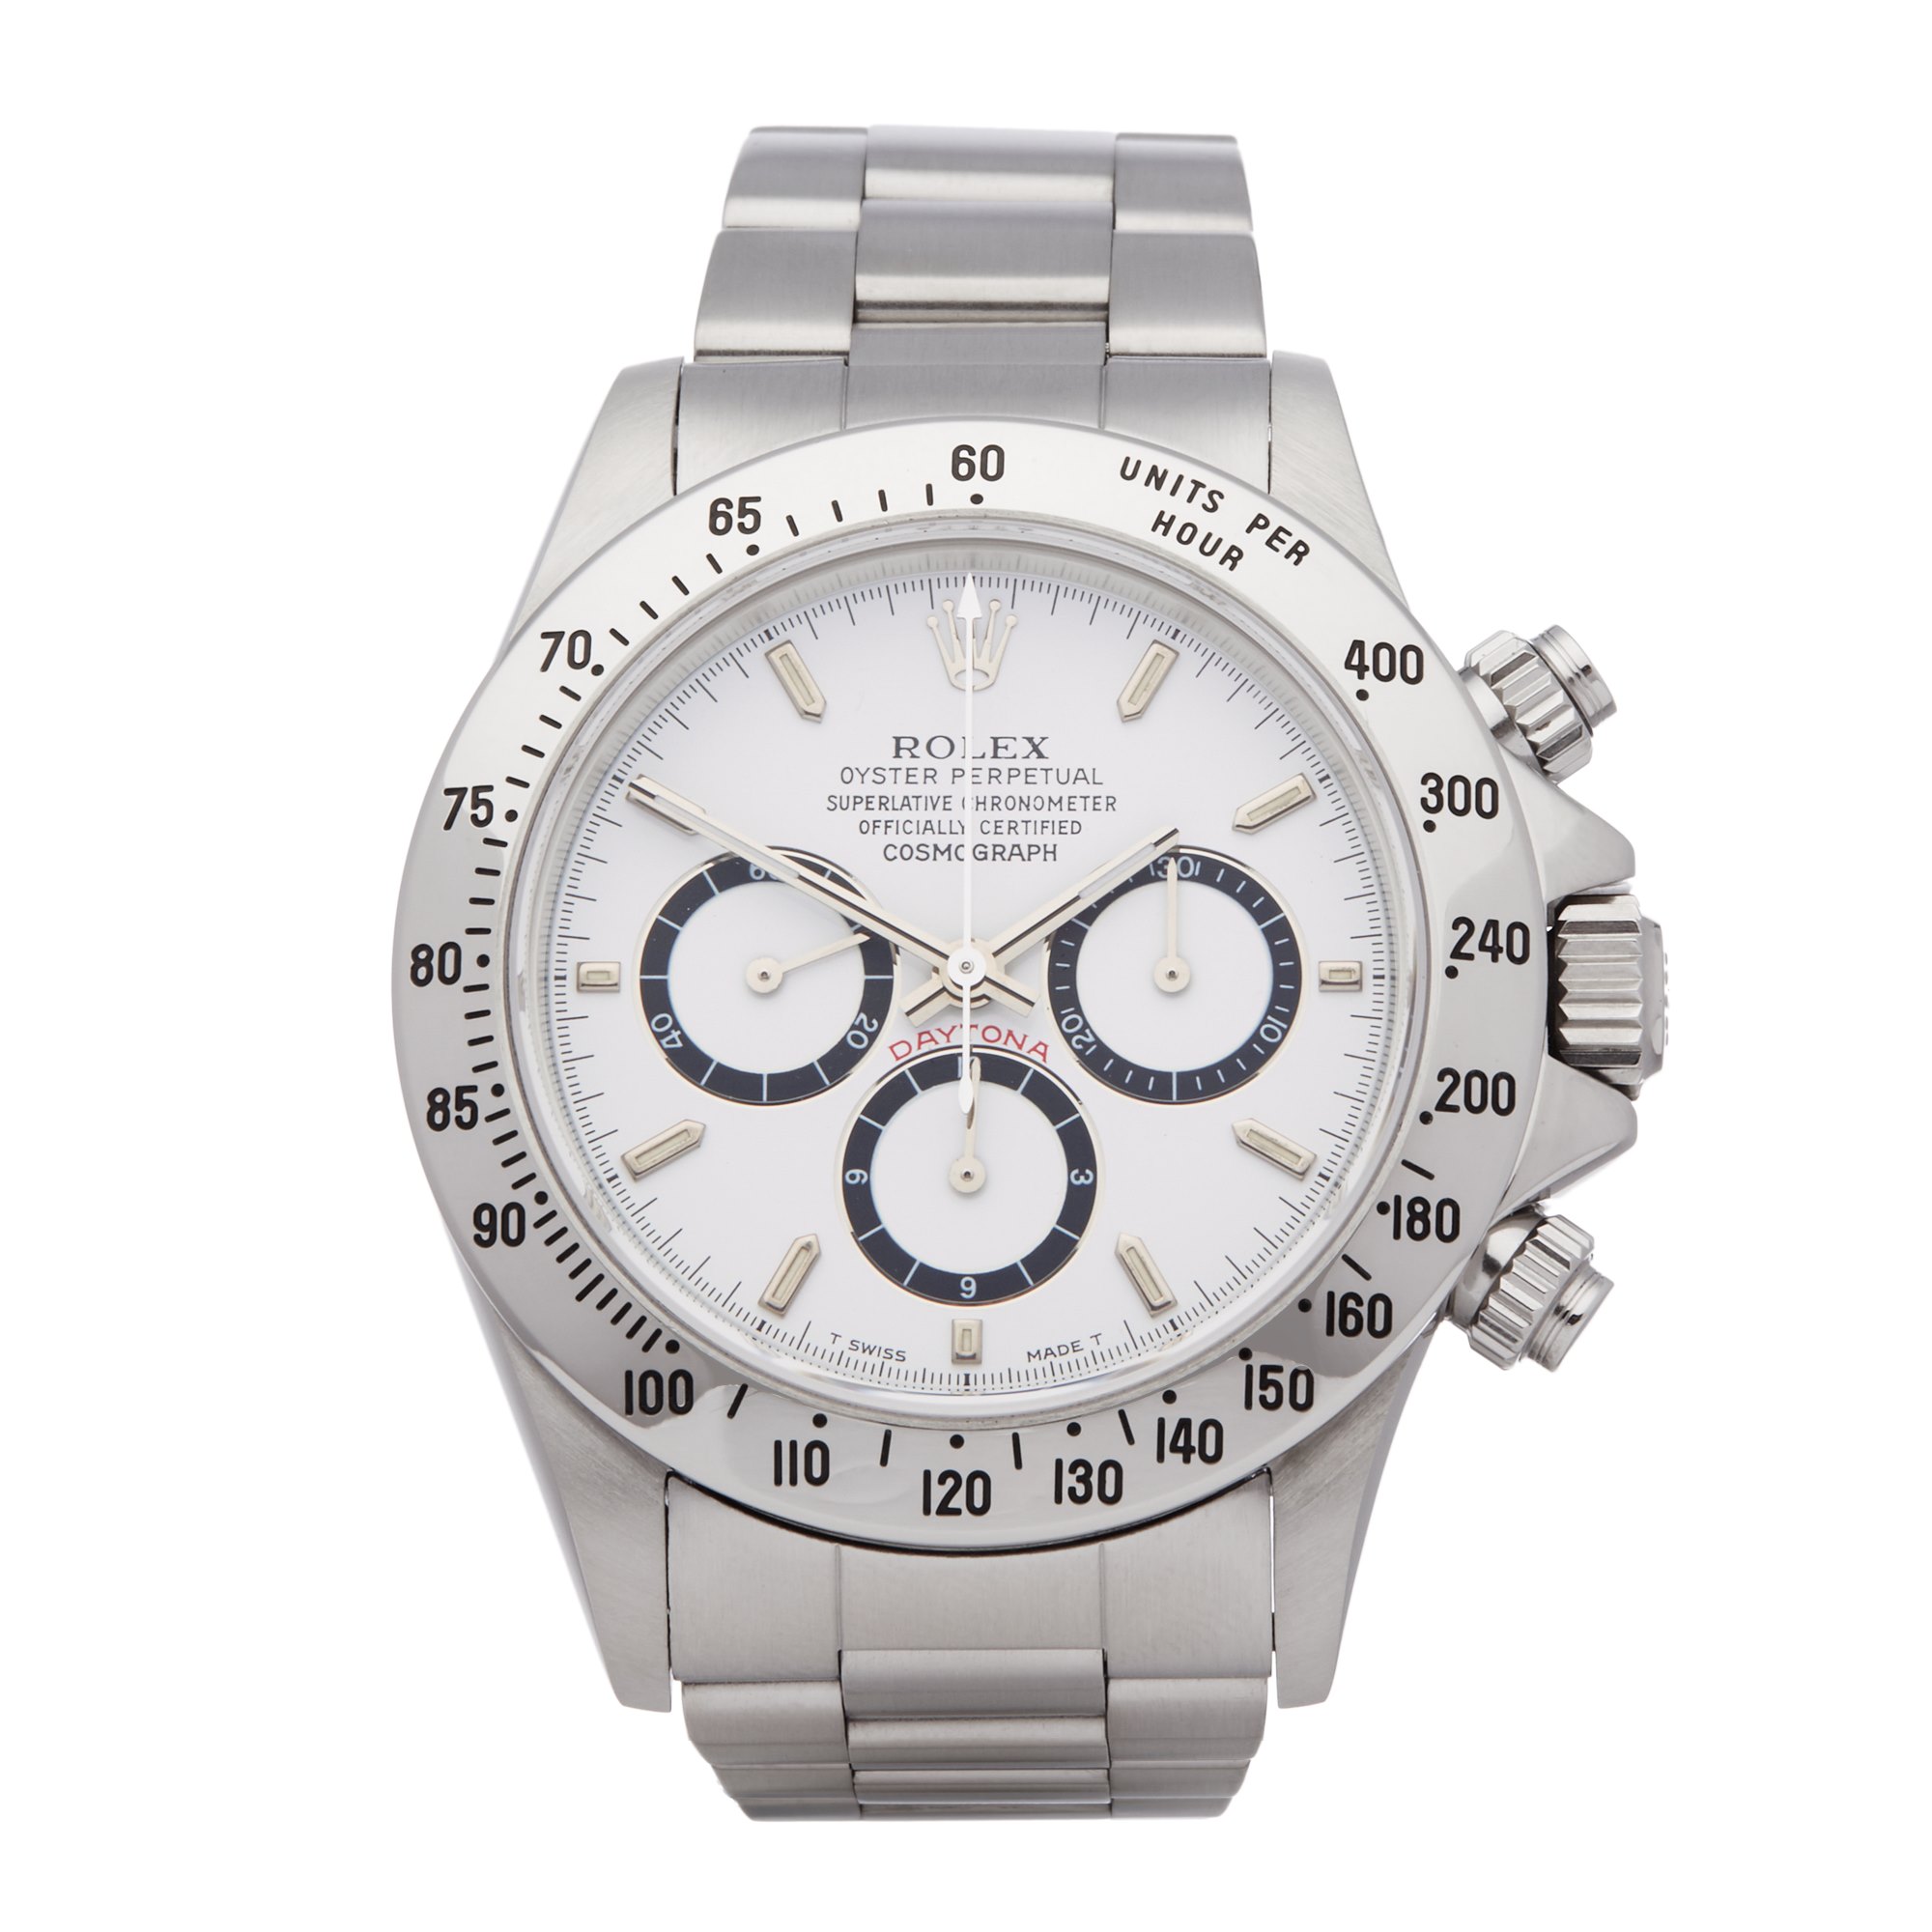 Pre-owned Rolex Watch Daytona 16520 